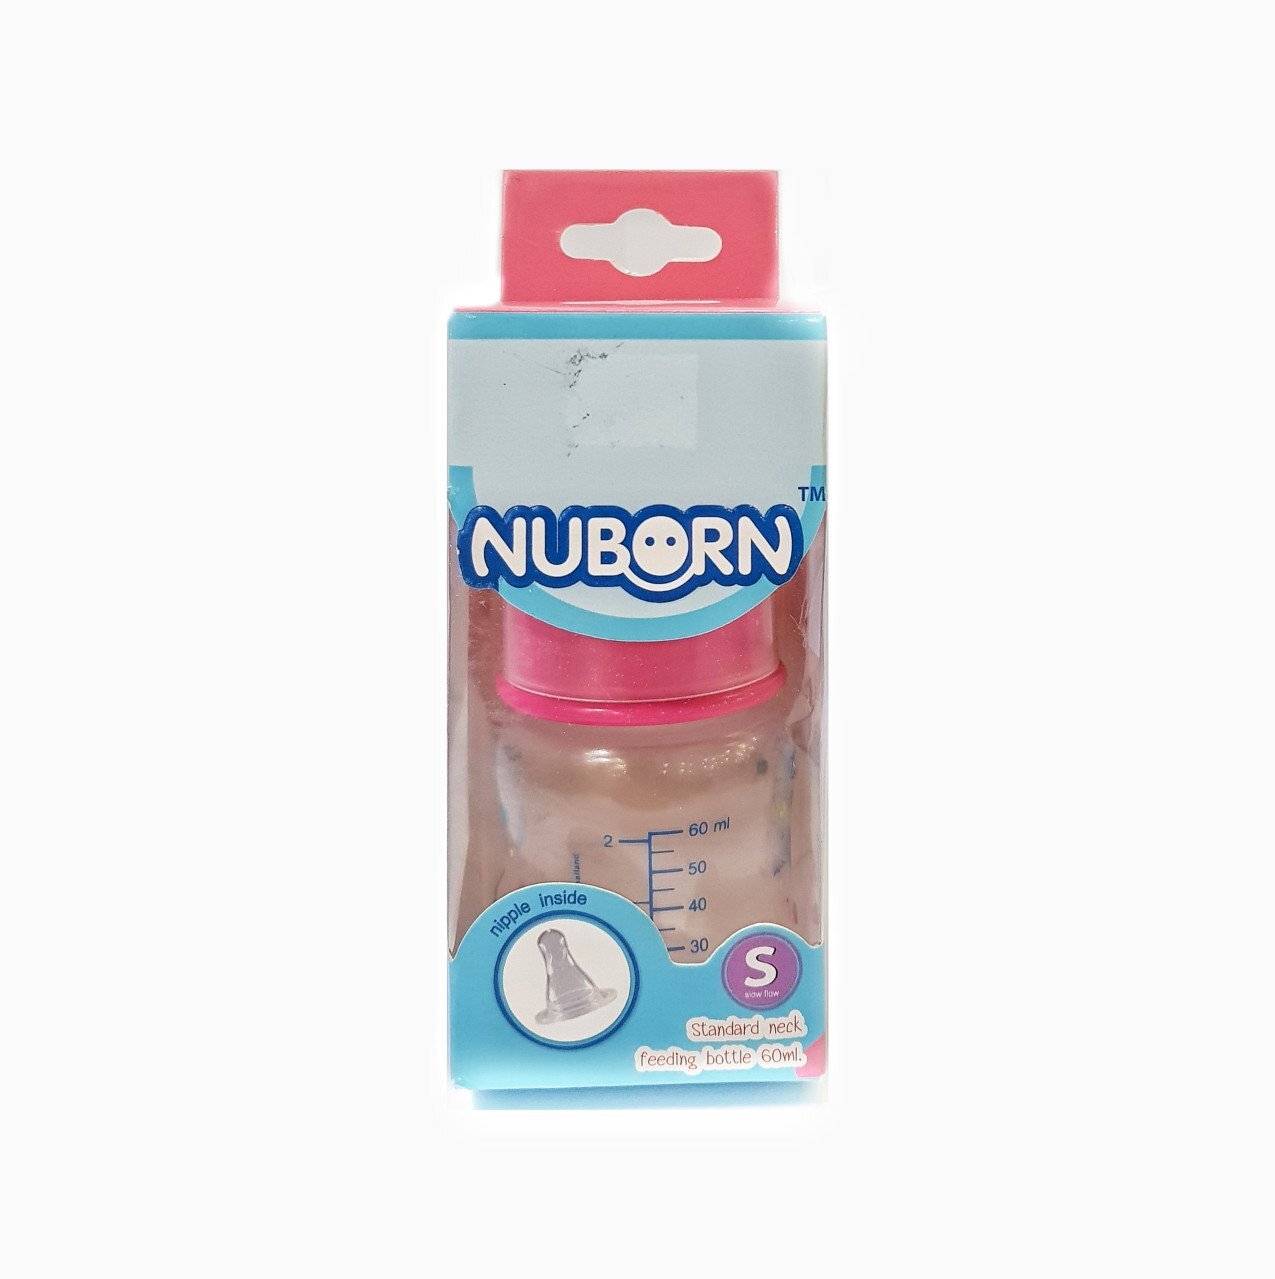 Bình sữa cổ hẹp Nuborn VT2001 - 60ml